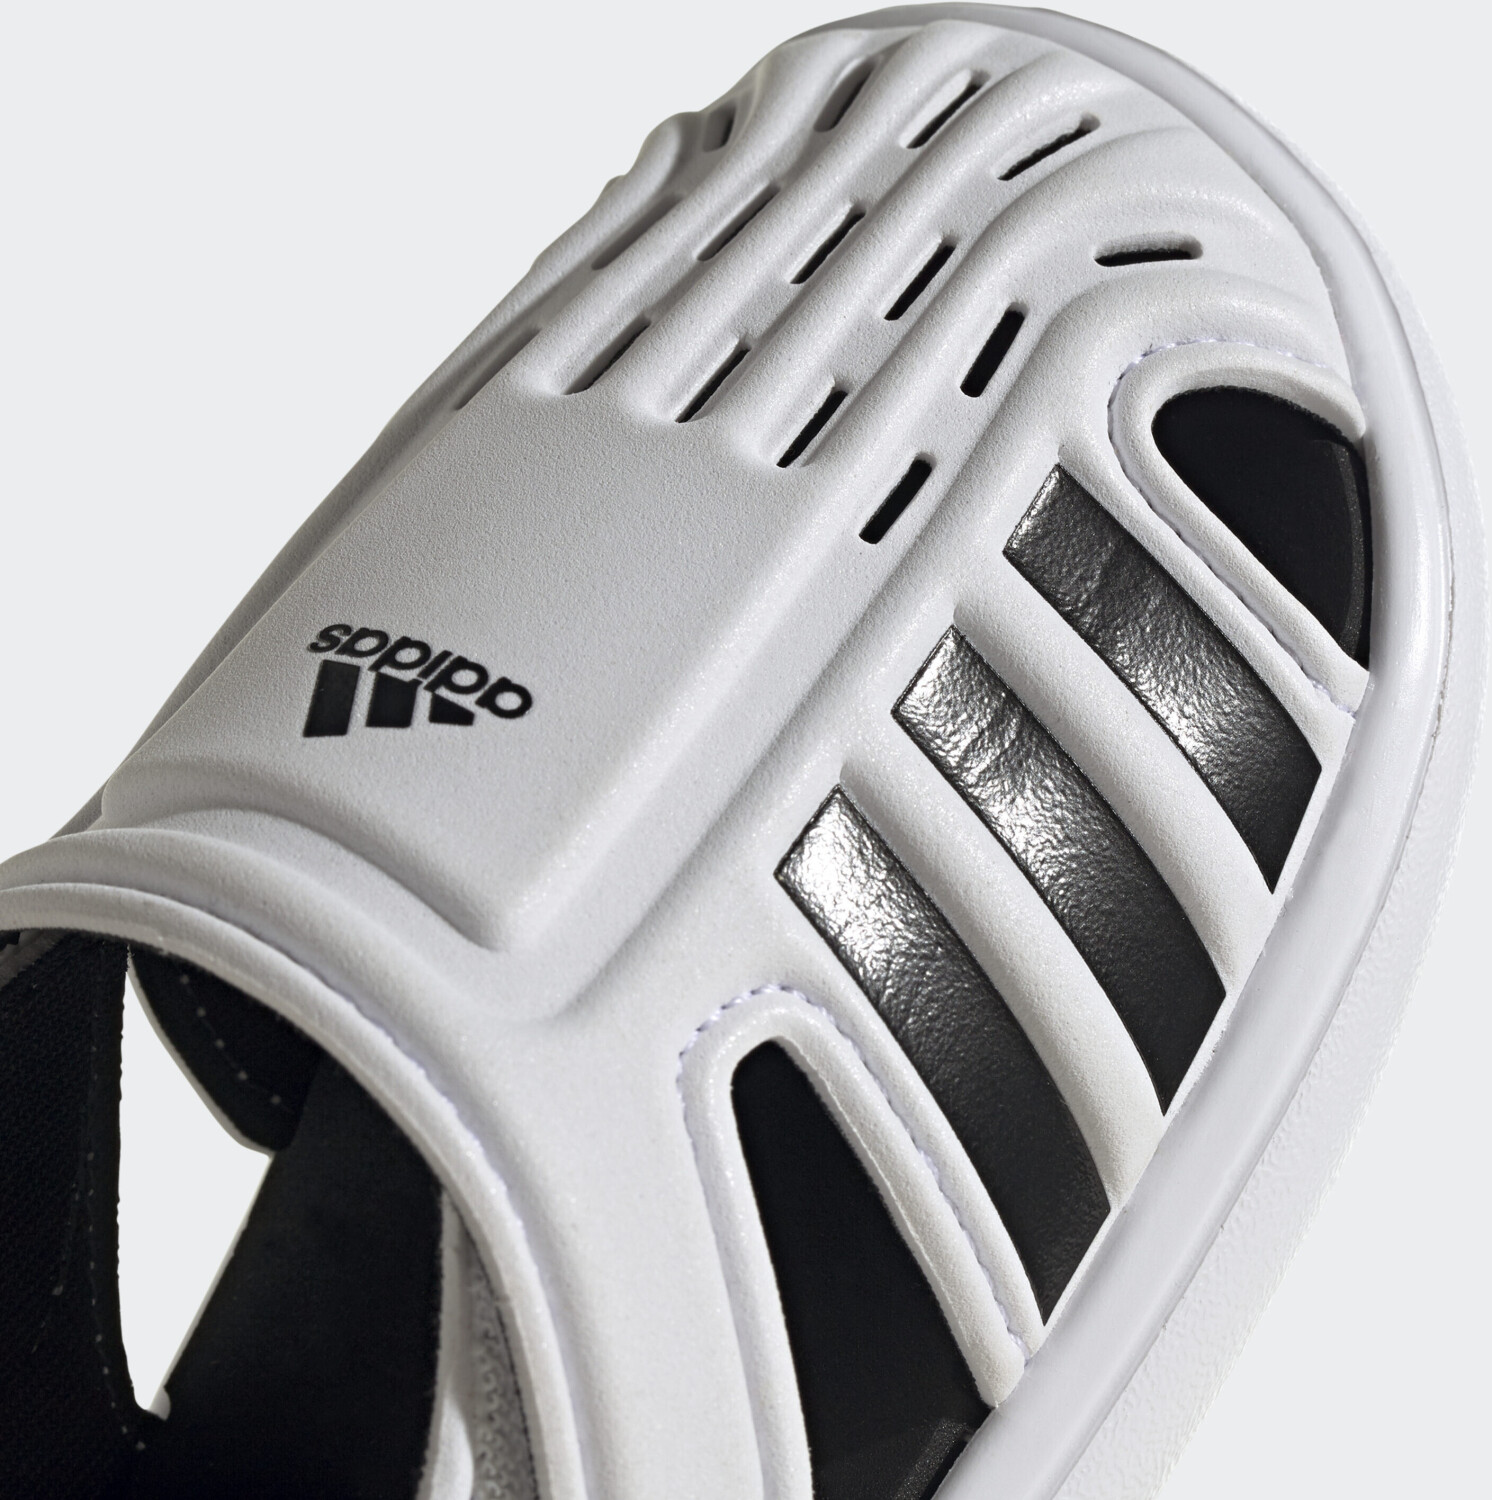 Adidas Water Sandale Cloud White/Core Black/Cloud White Kinder ab 24,95 € |  Preisvergleich bei